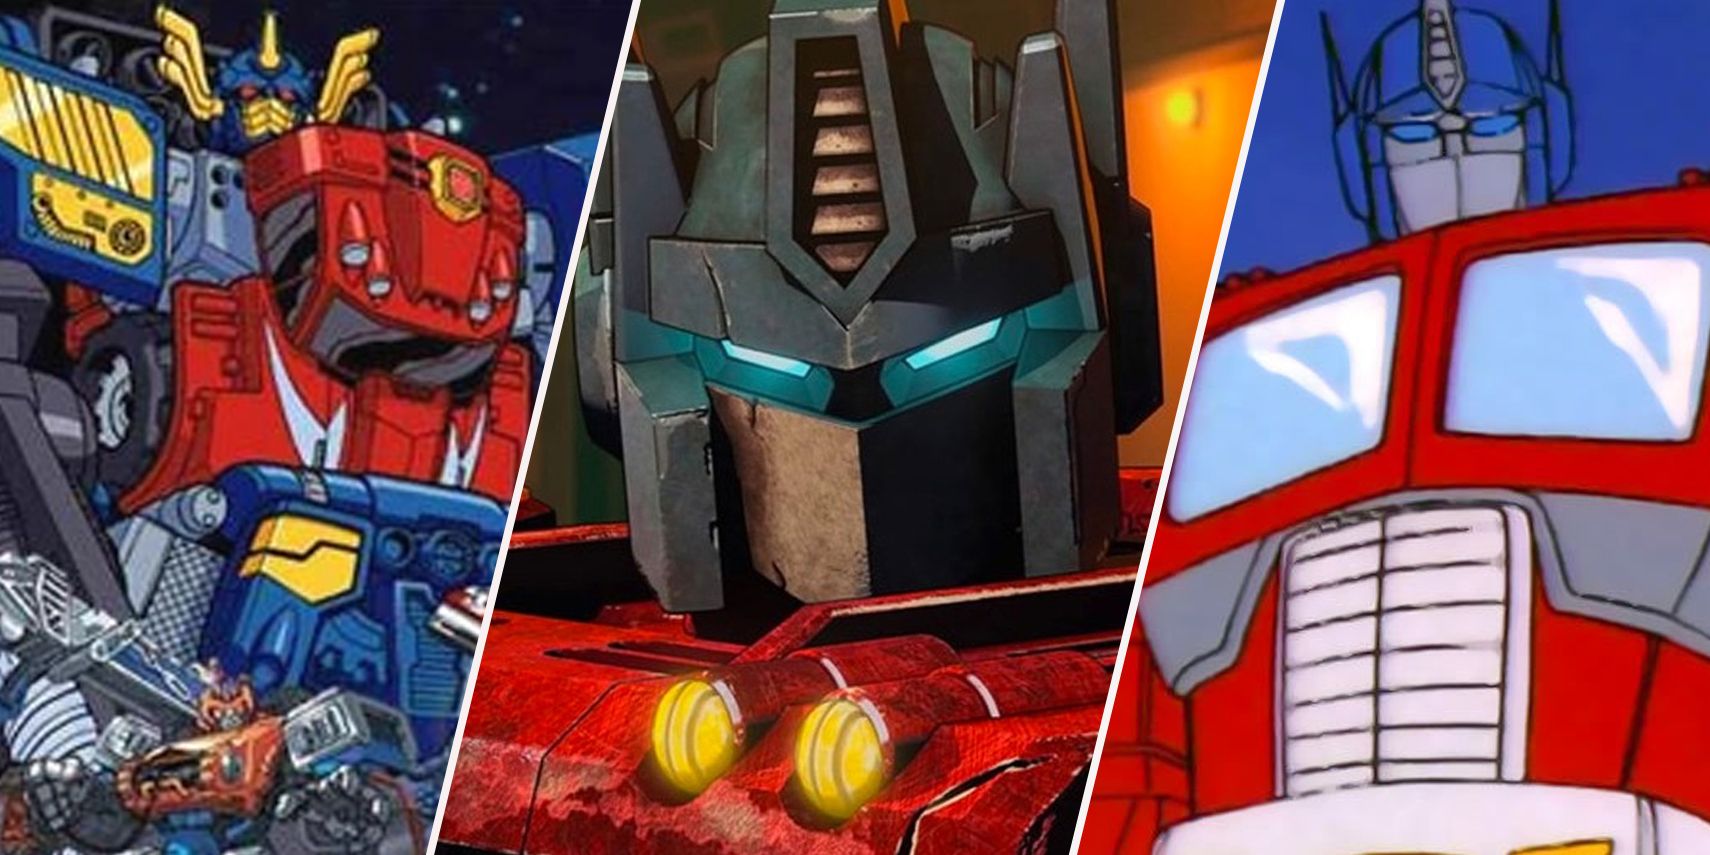 transformers animated season 1 episode 4